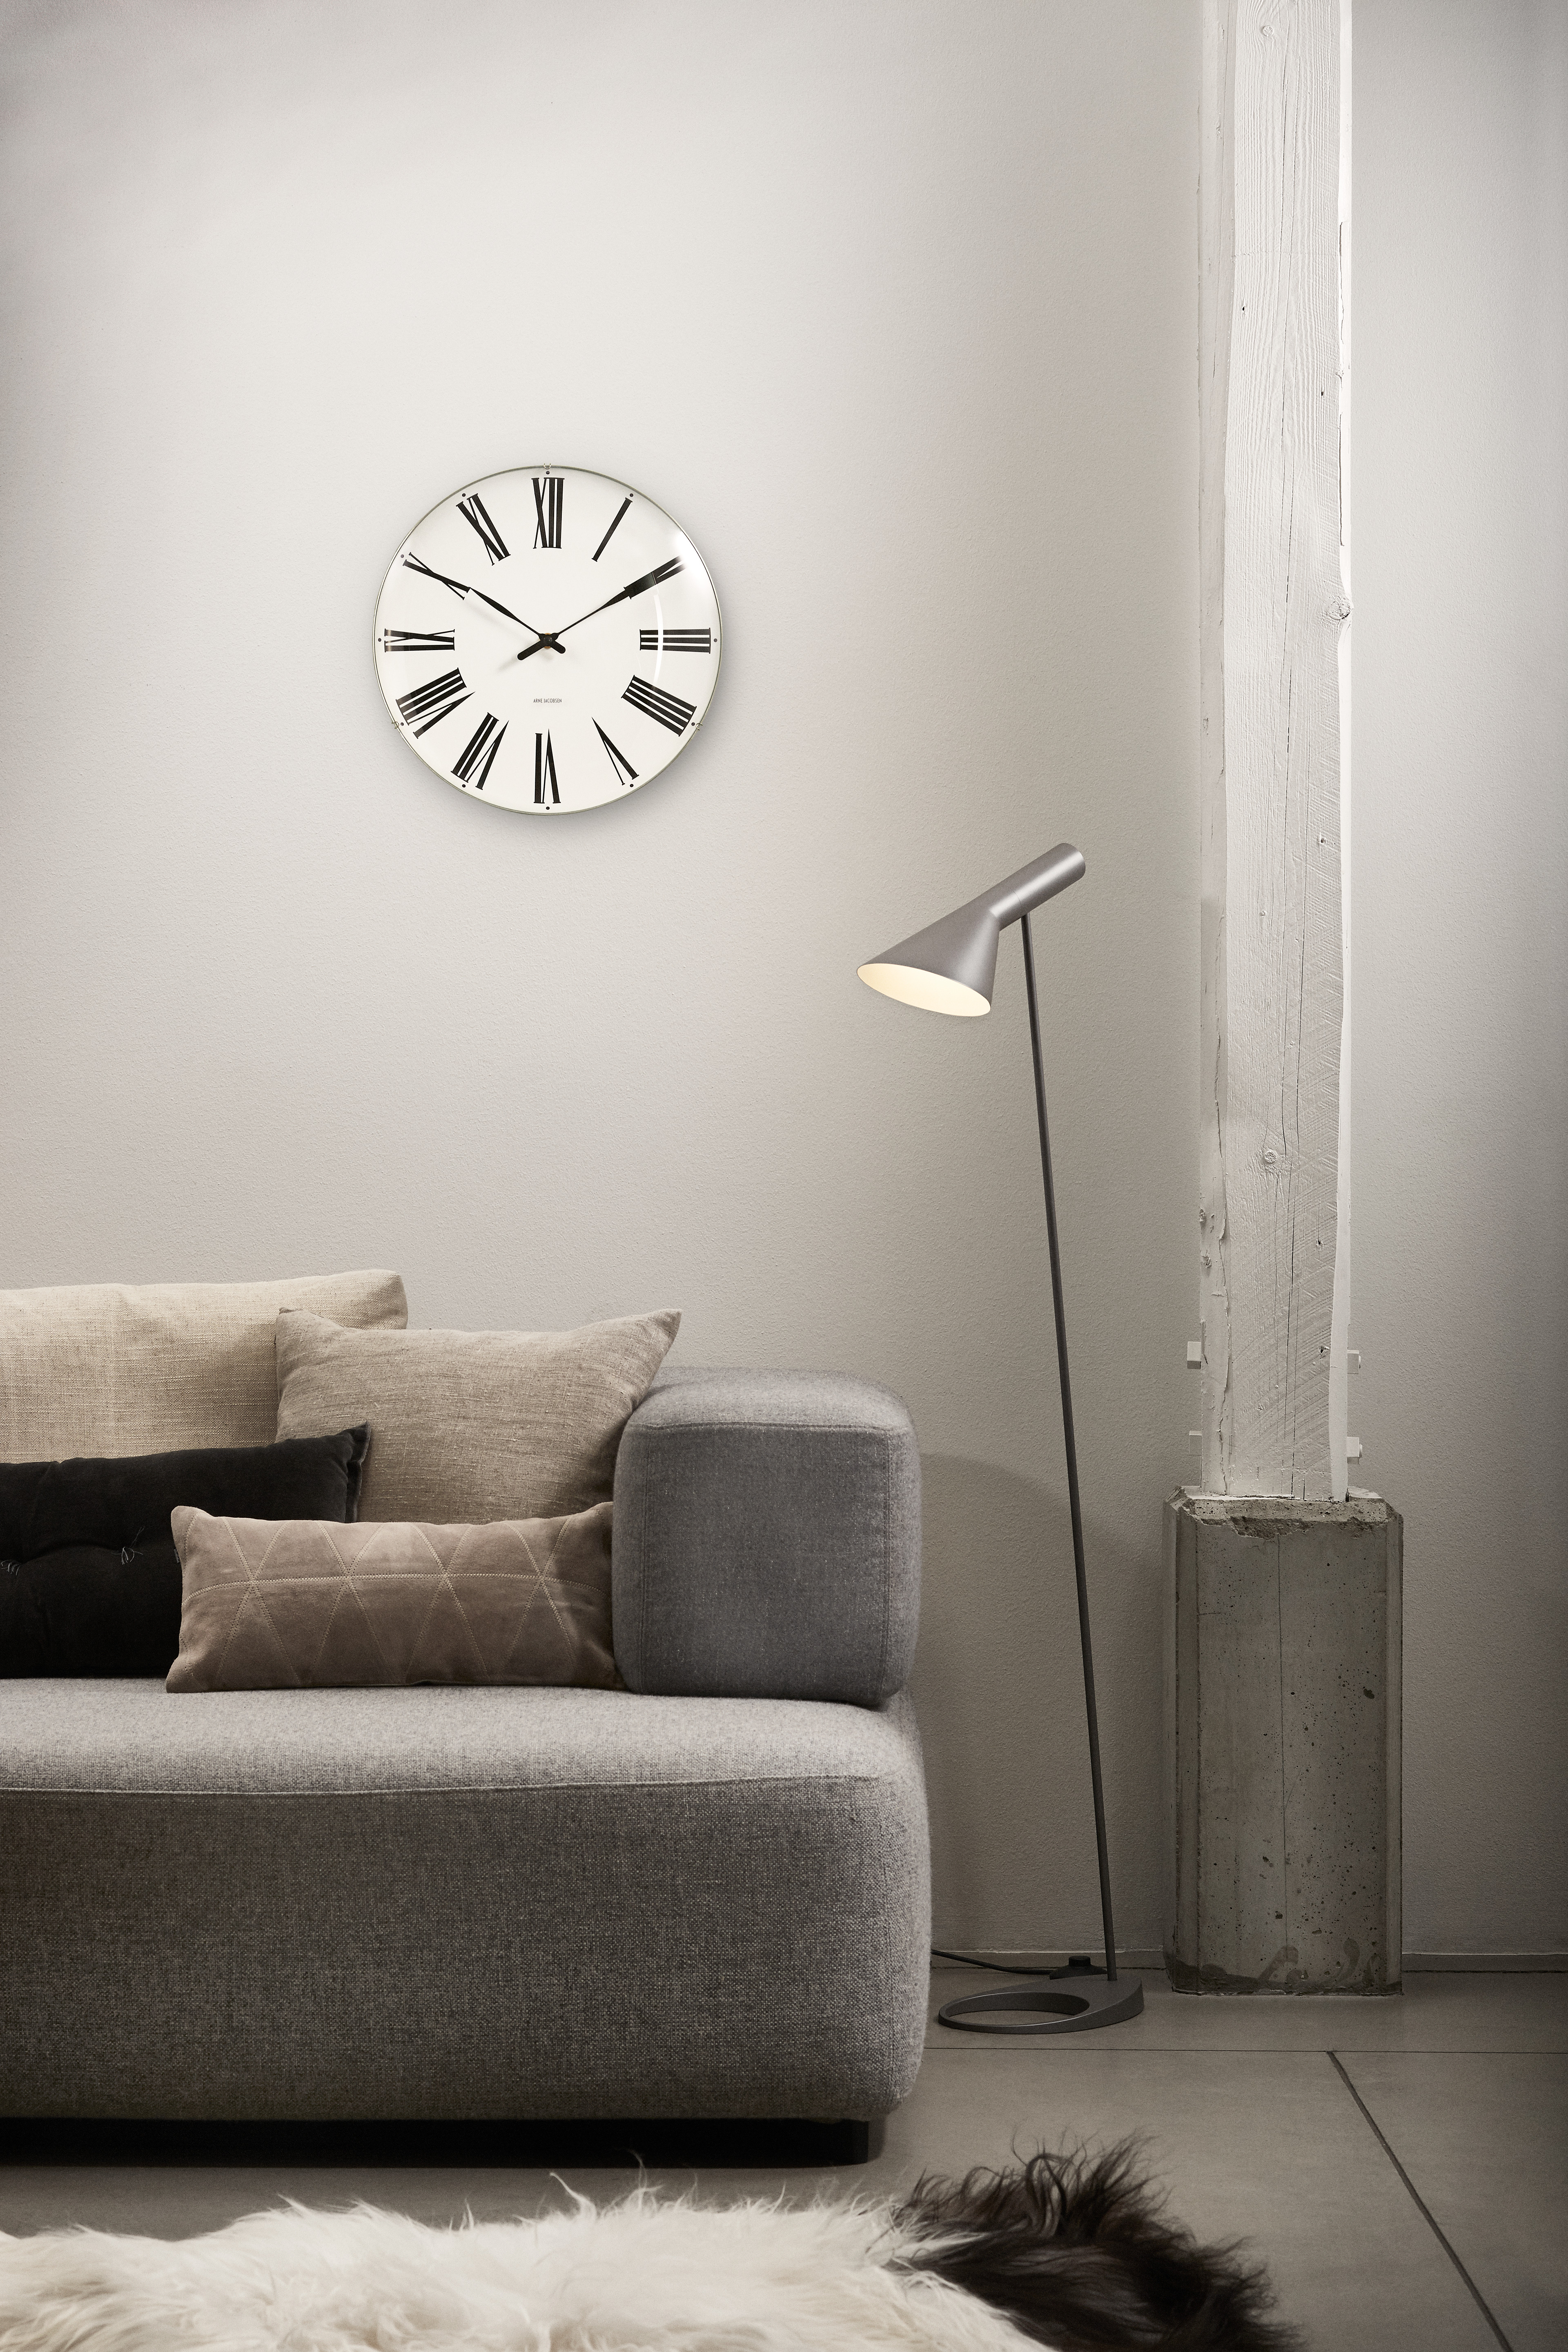 An Arne Jacobsen roman clock hanging abov a grey sofa with beige pillows.